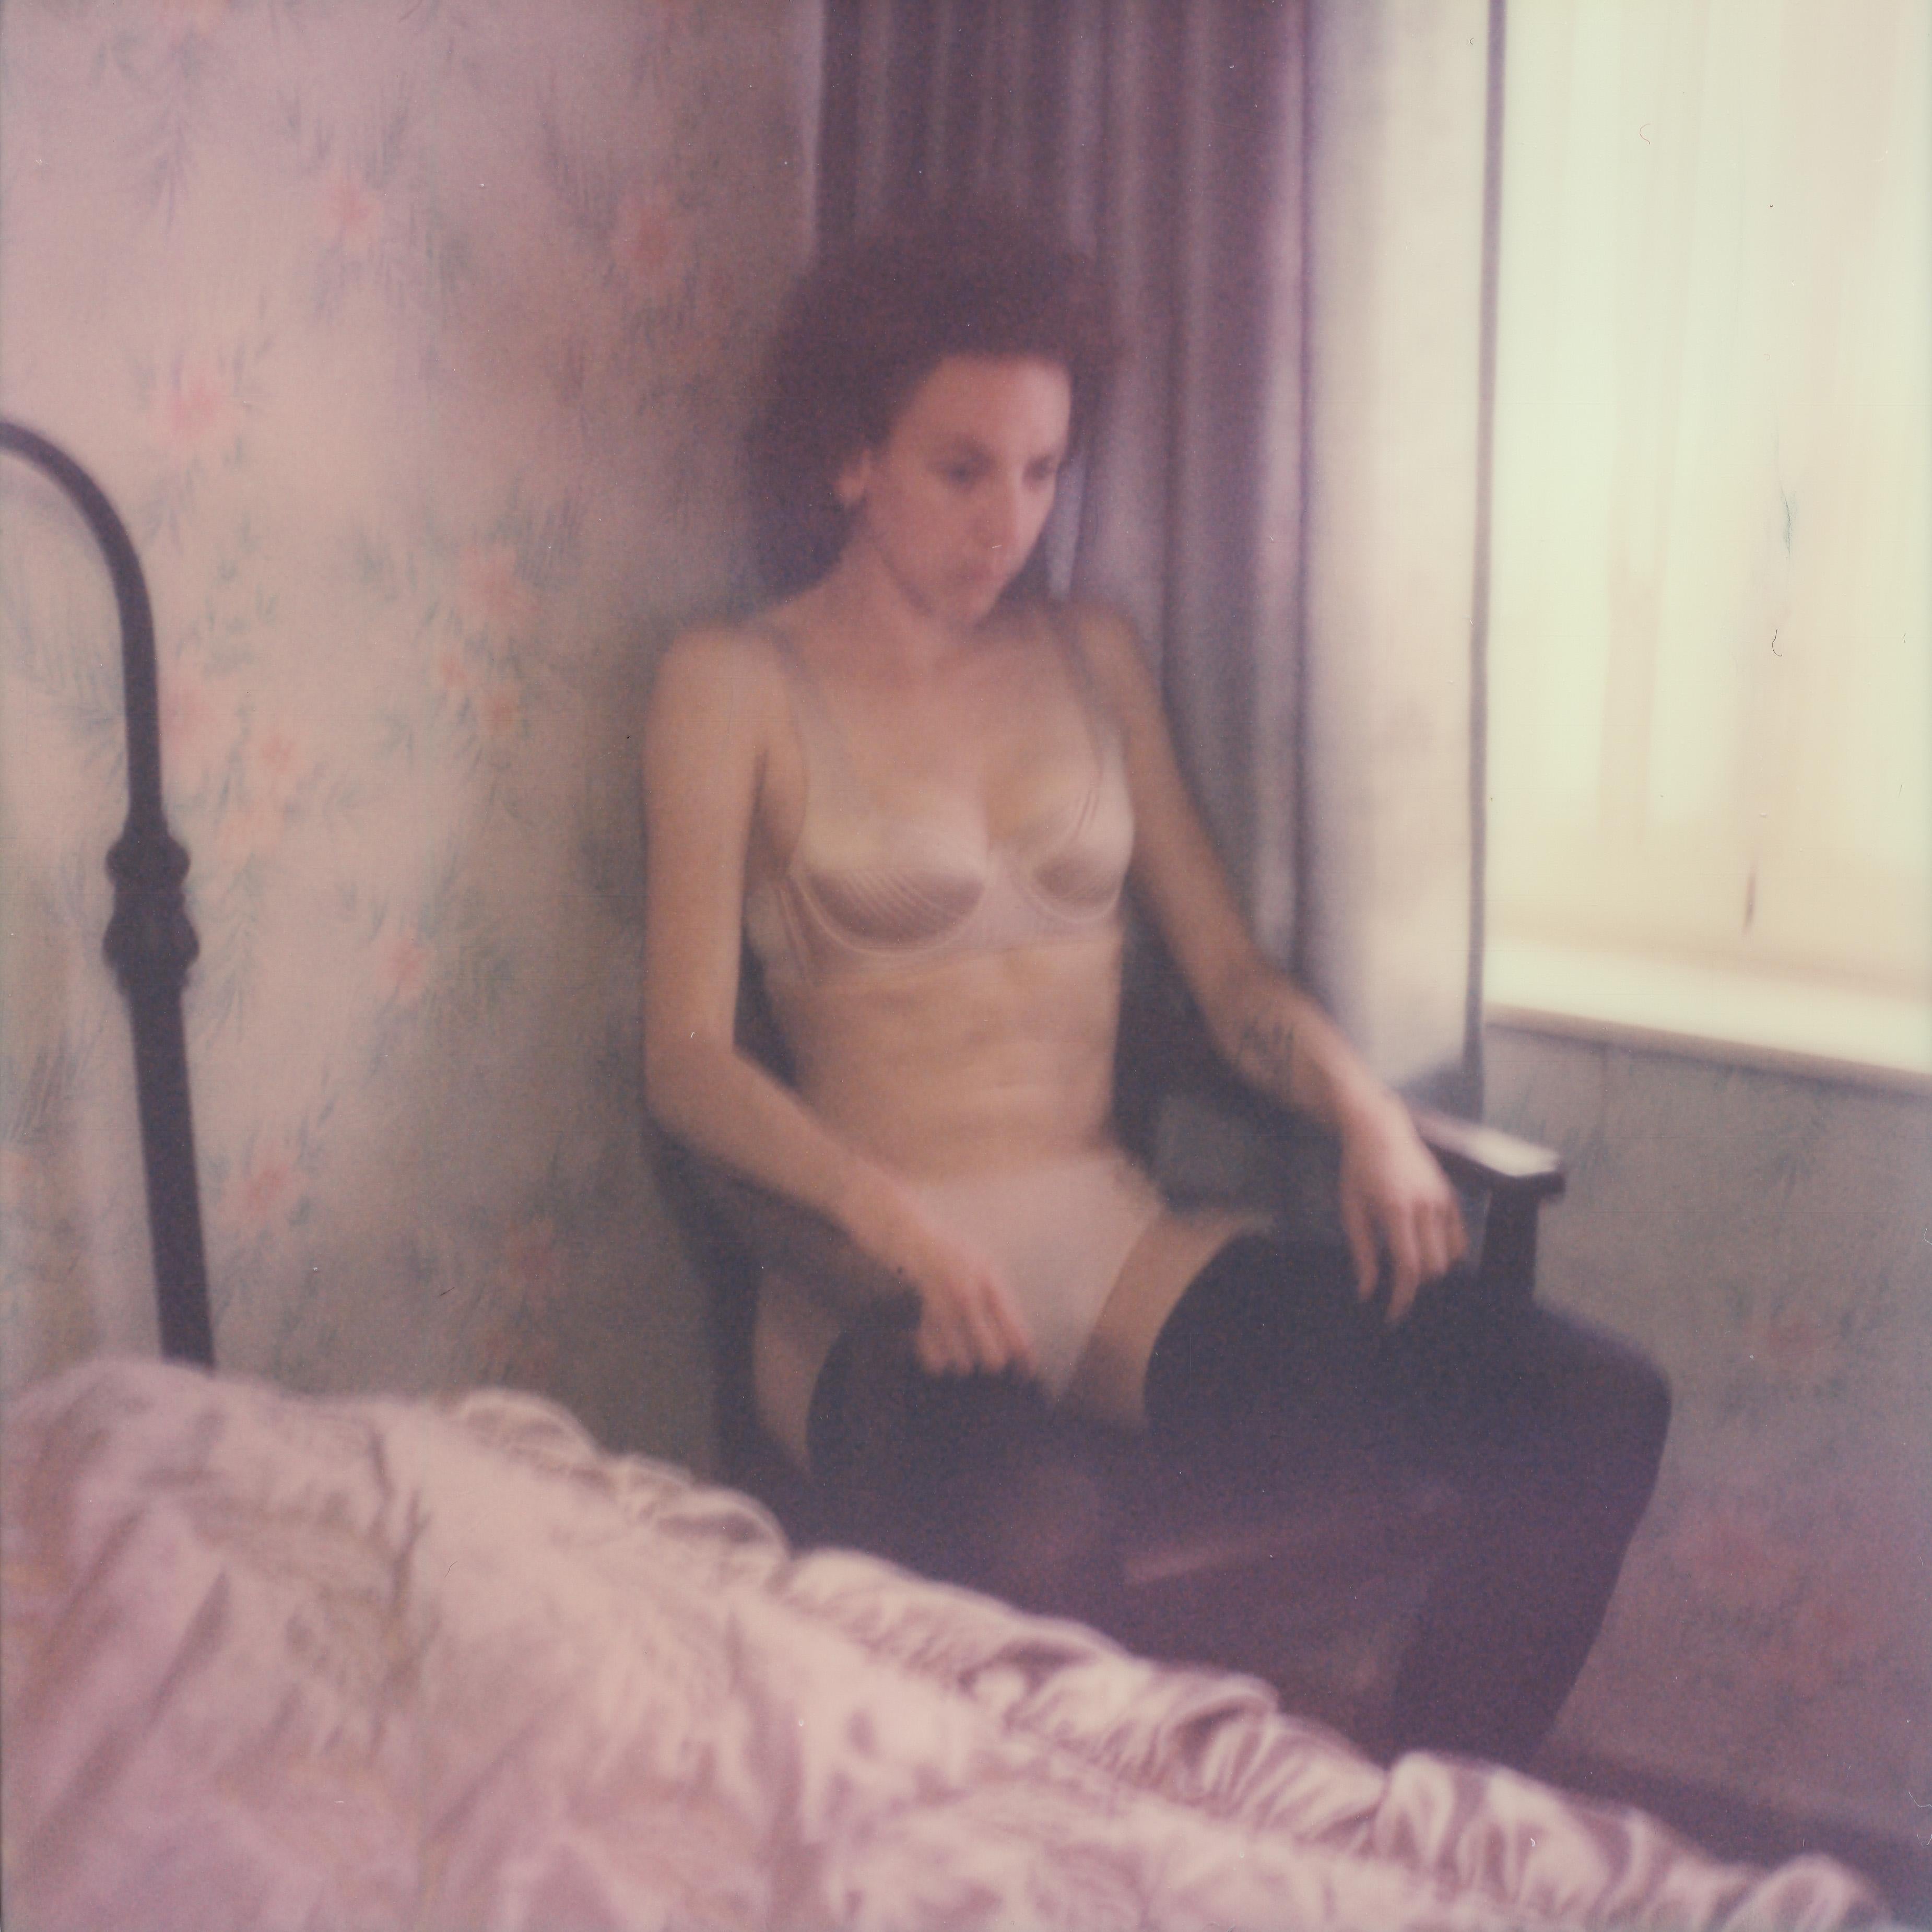 Kirsten Thys van den Audenaerde Nude Photograph - Another world - Contemporary, Nude, Women, Polaroid, 21st Century